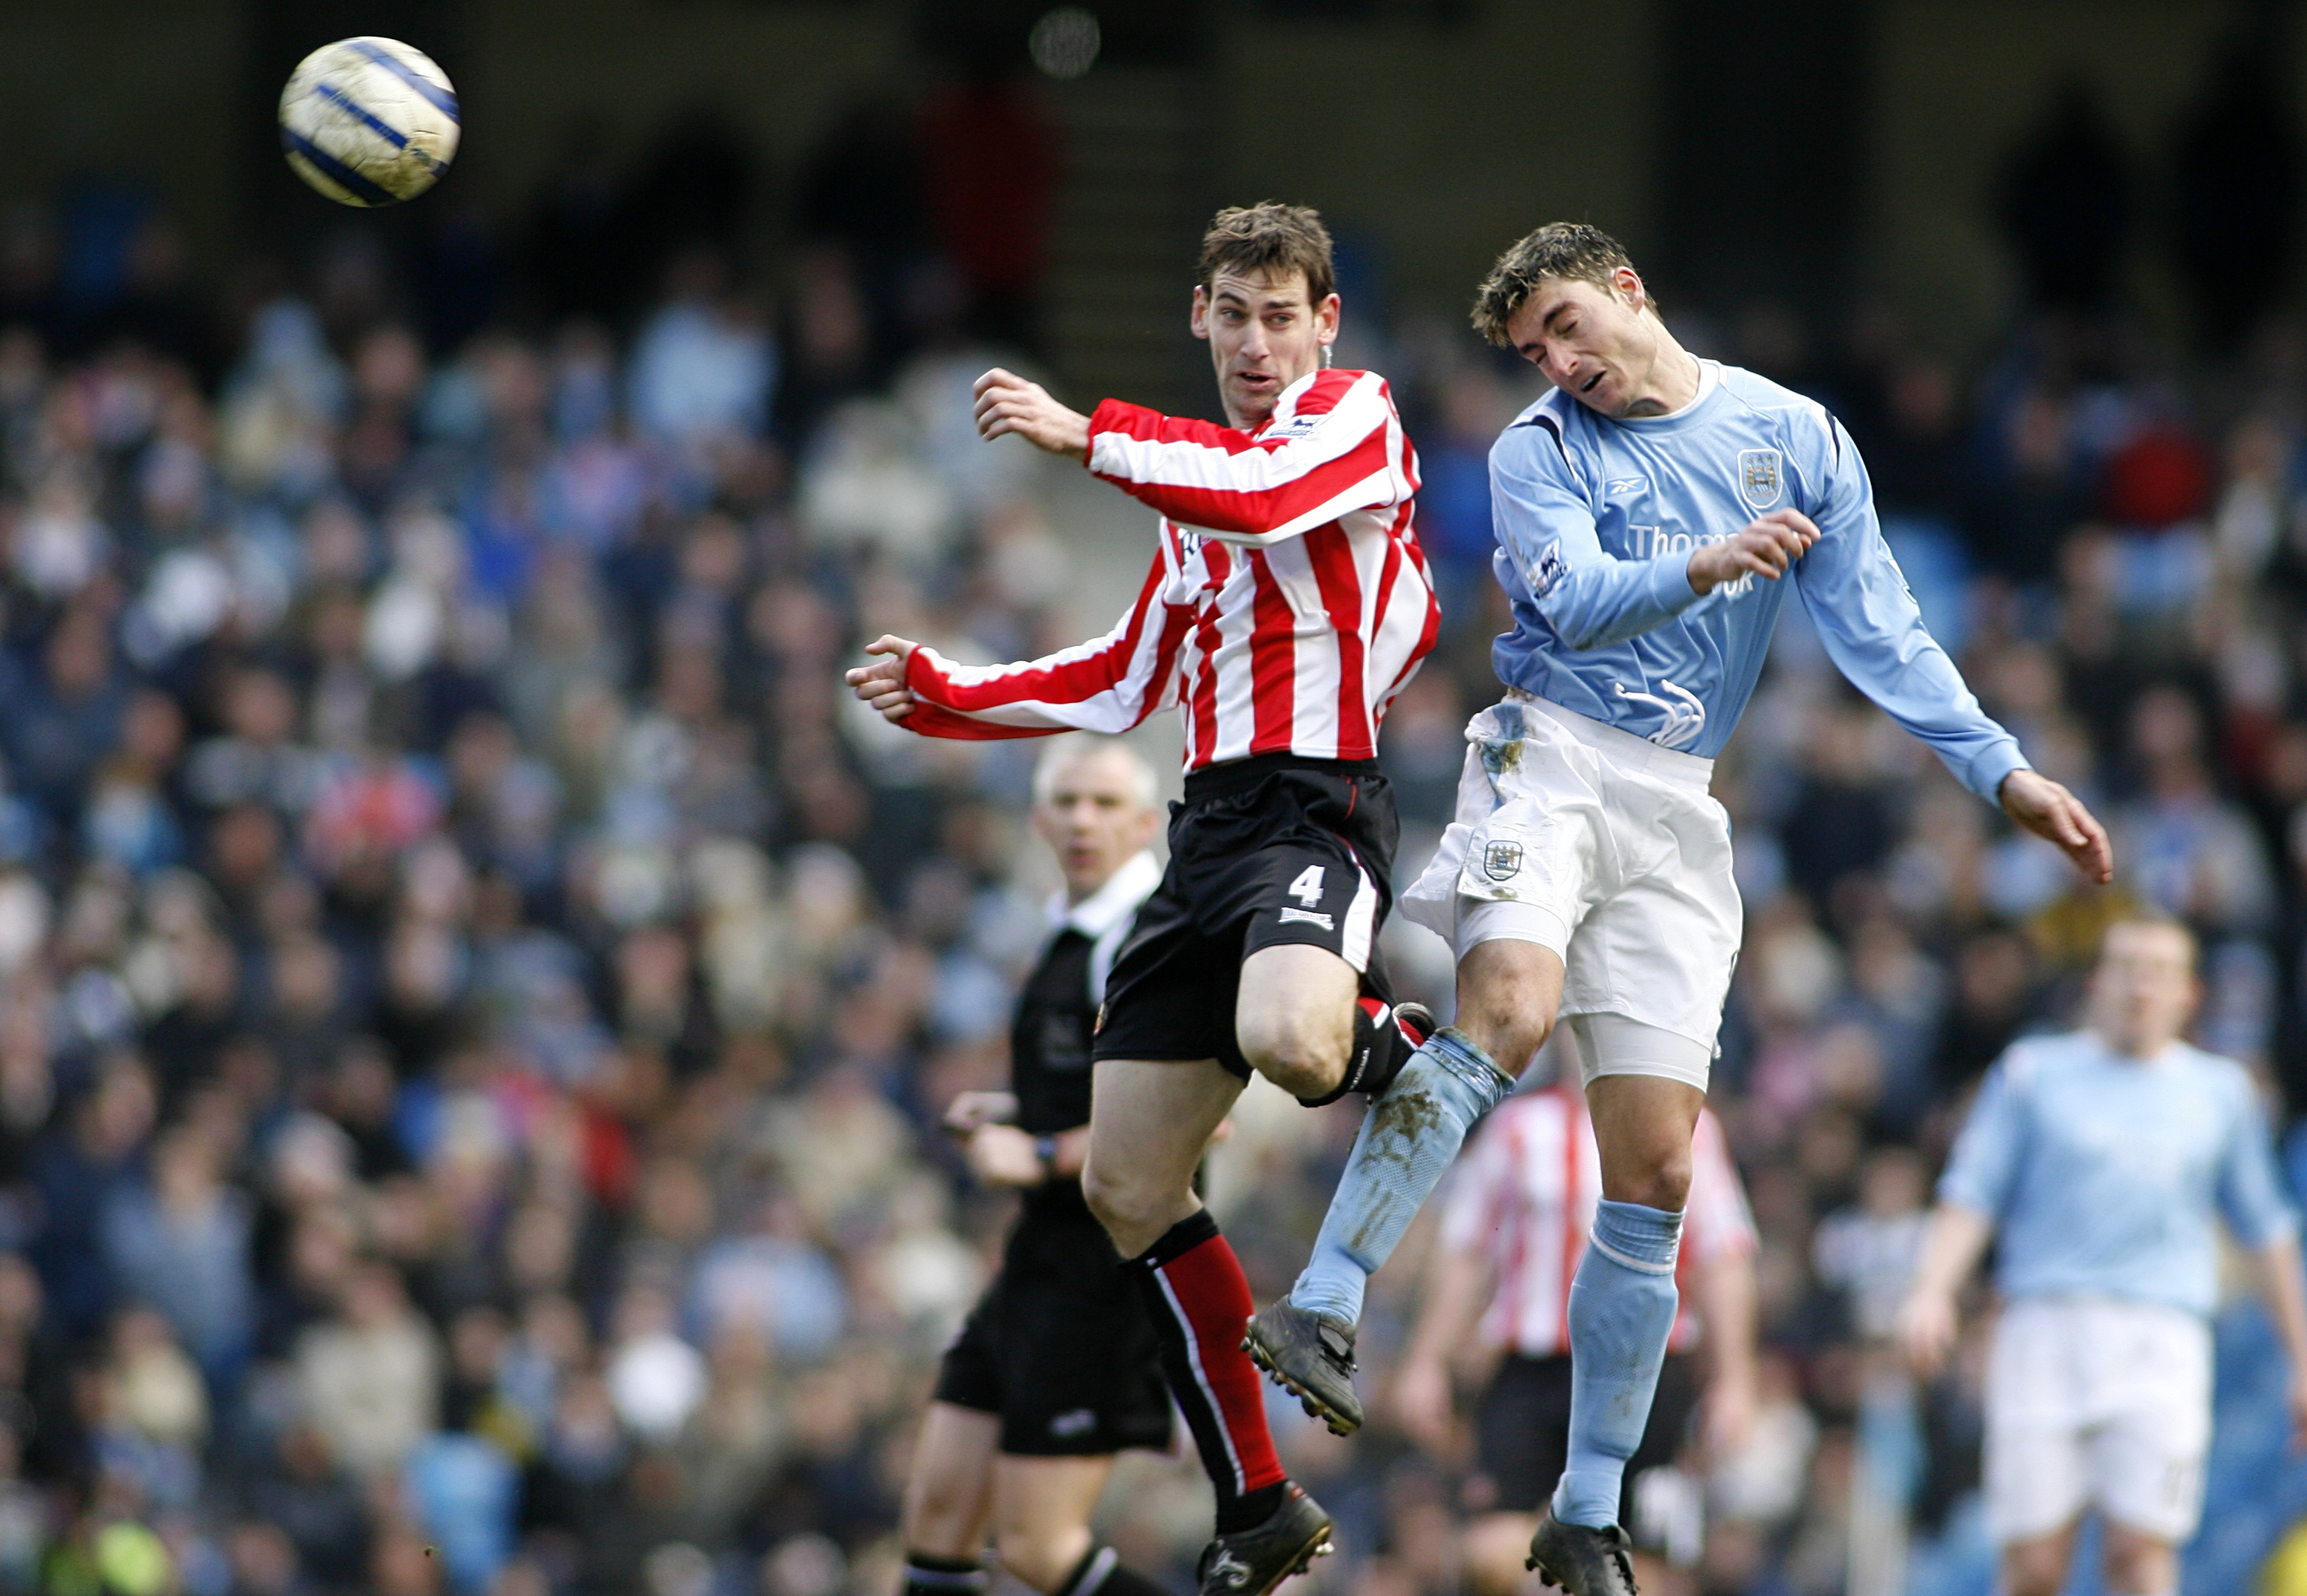 Soccer - FA Barclays Premiership - Manchester City v Sunderland - The City of Manchester Stadium